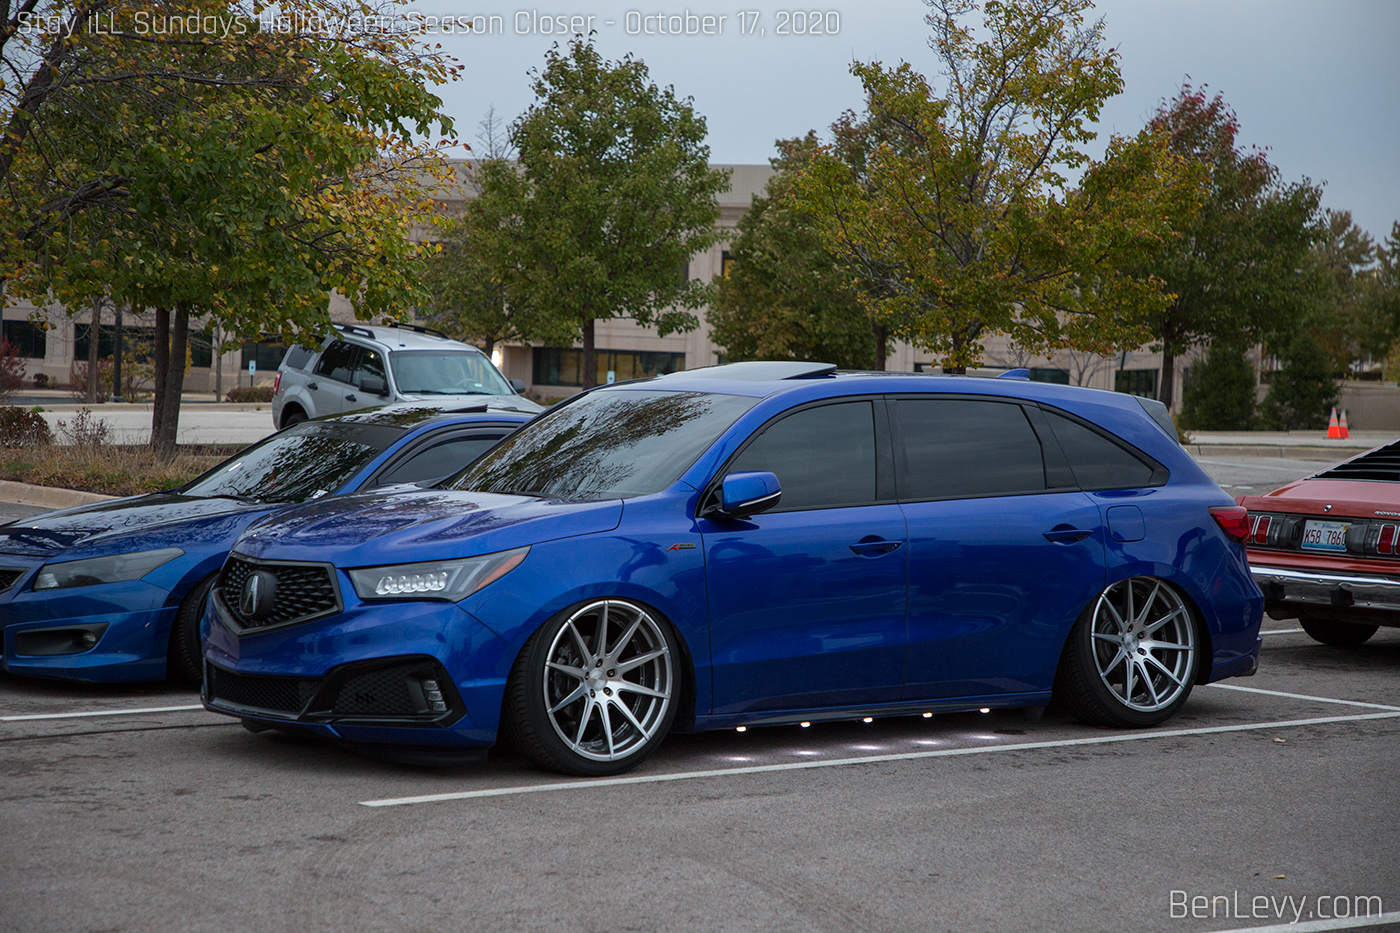 Blue, Bagged Acura MDX